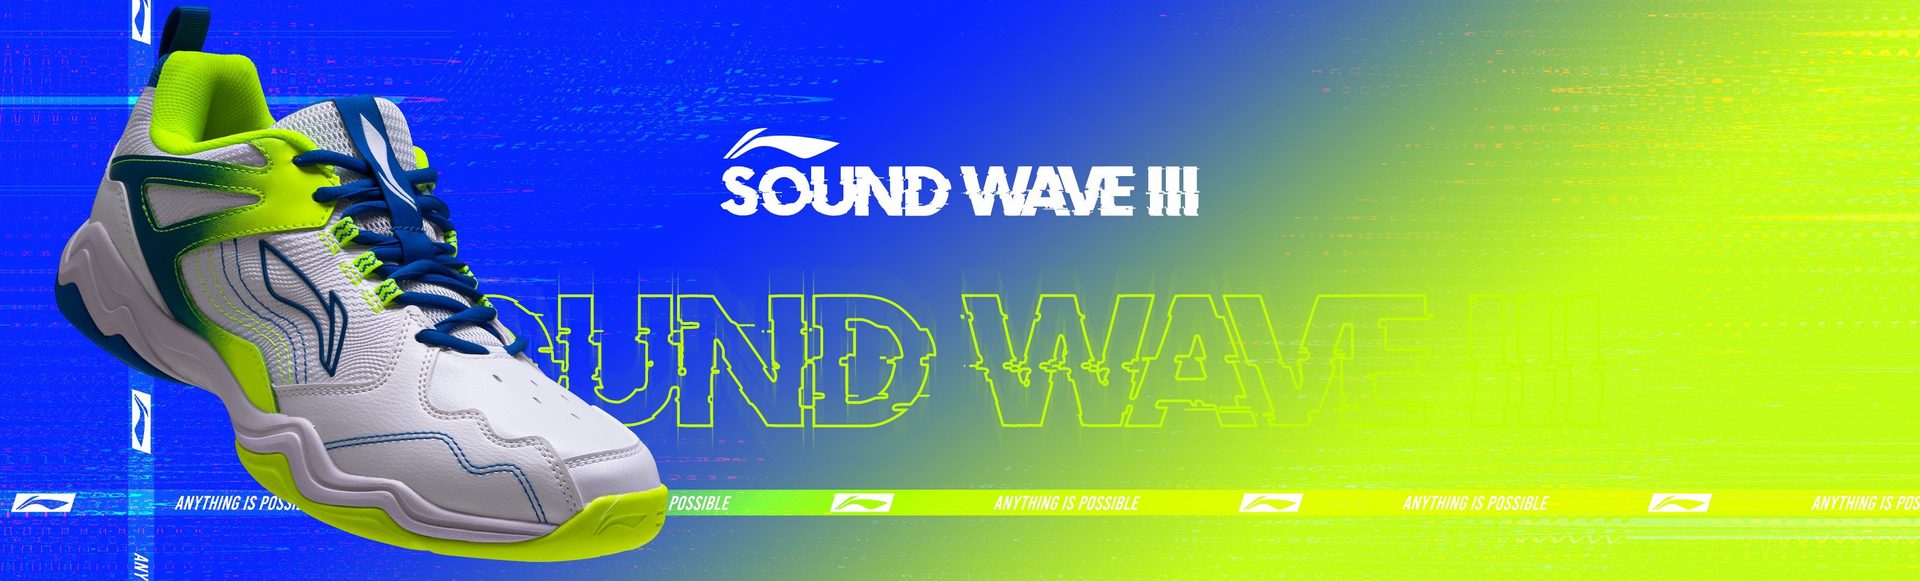 Sound Wave III